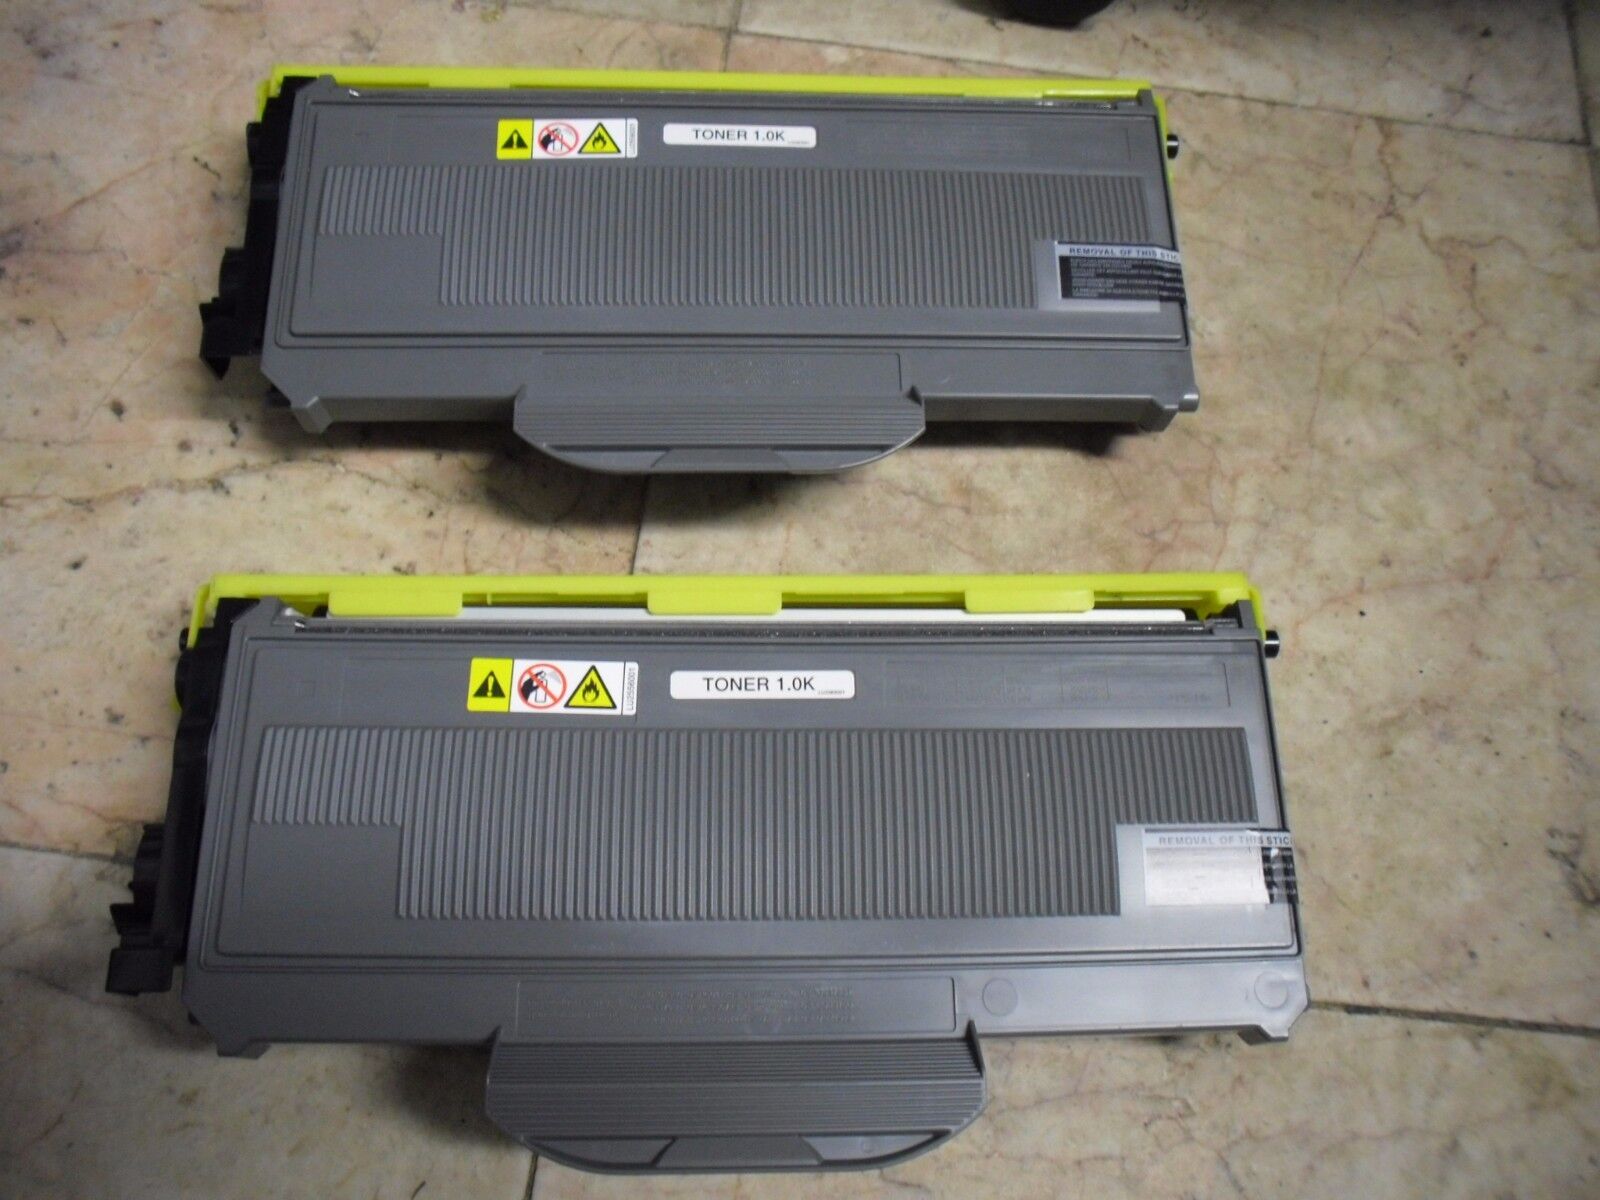 2PK Toner SP1200A for Ricoh Aficio SP1200 SP1210 SP 1210N Copier Printer 406837